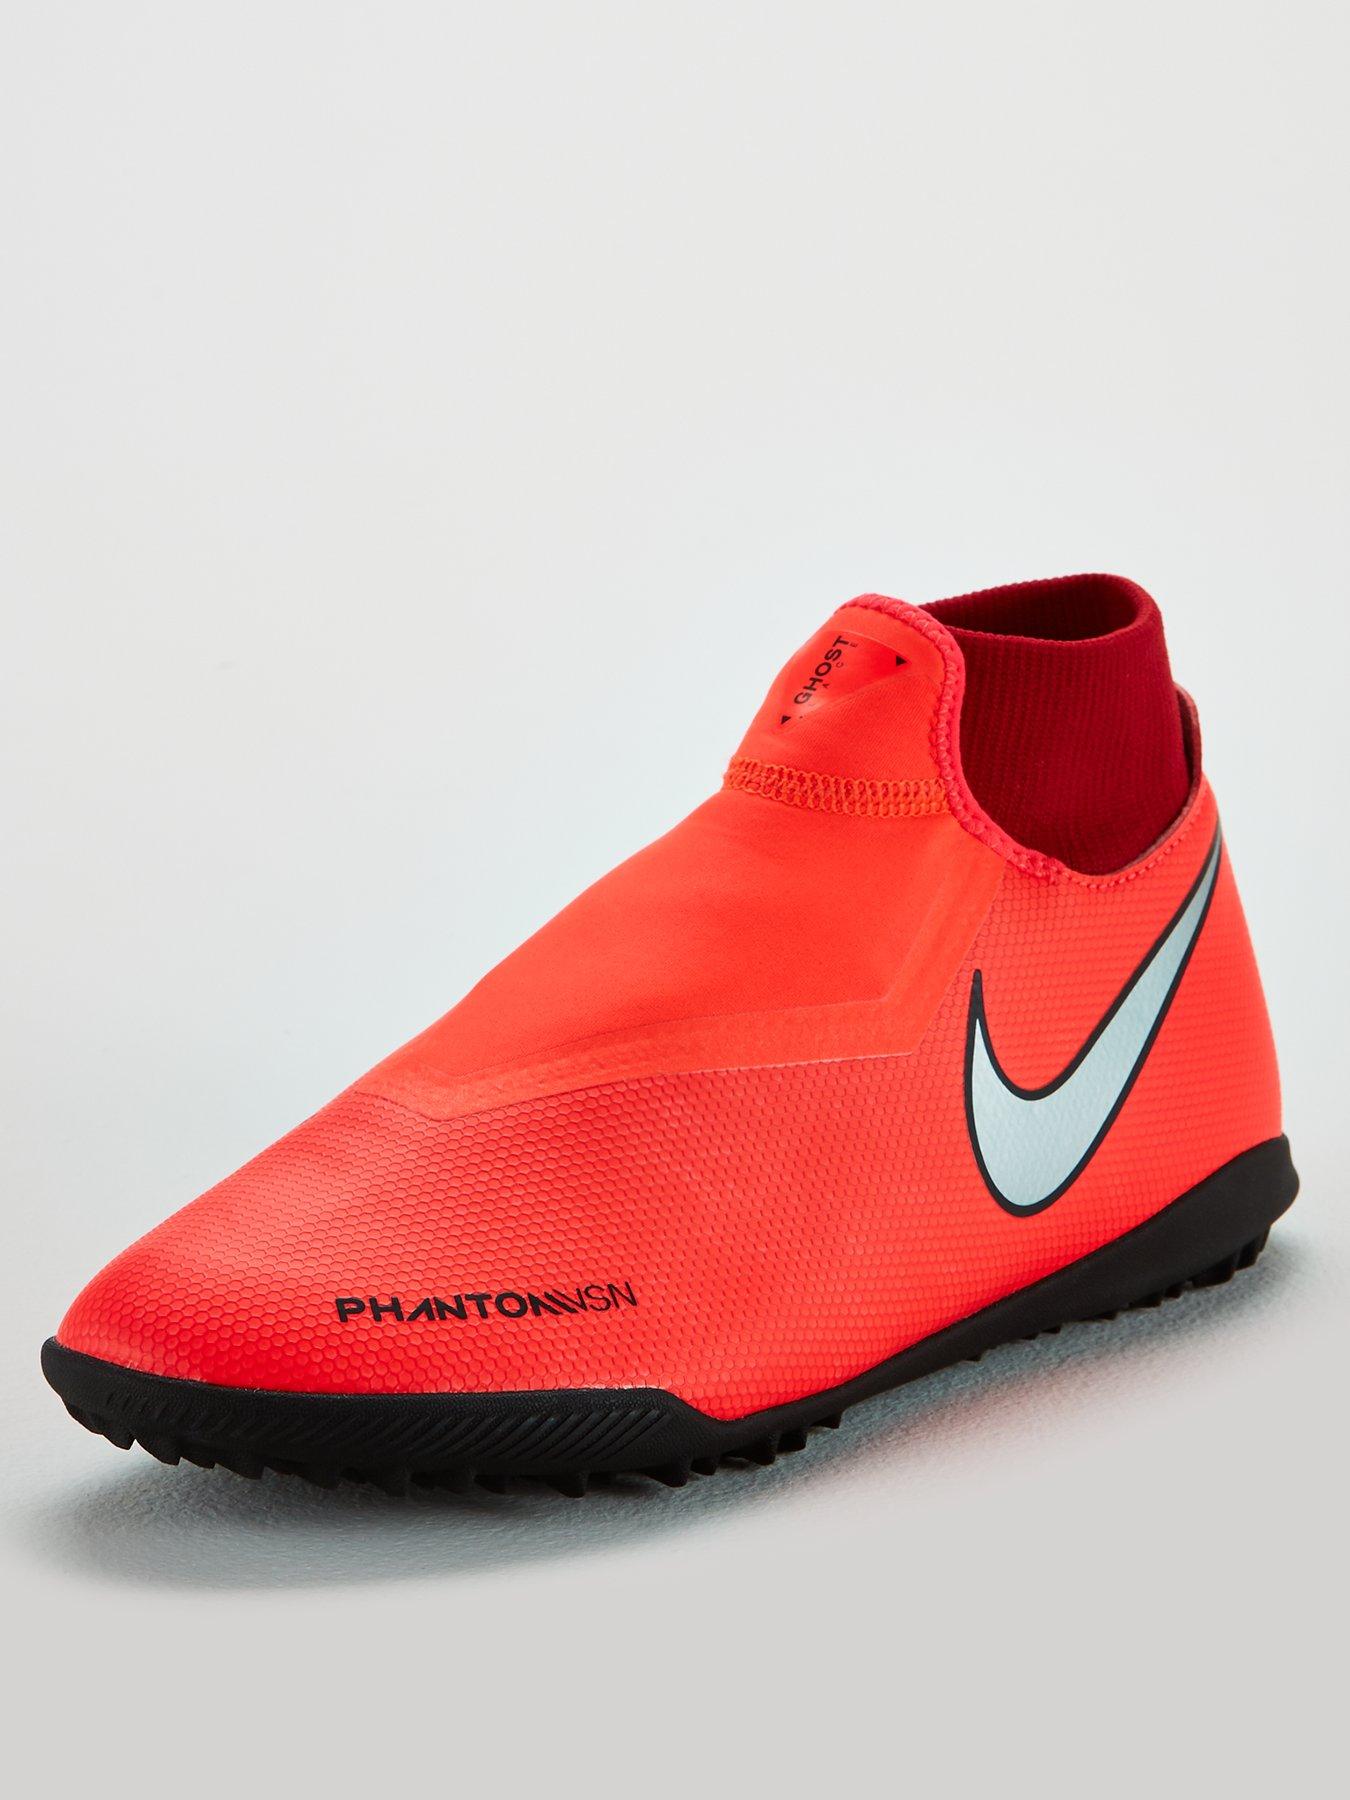 Men Soccer Iii Shoes Phantom Hypervenom Df Football Nike